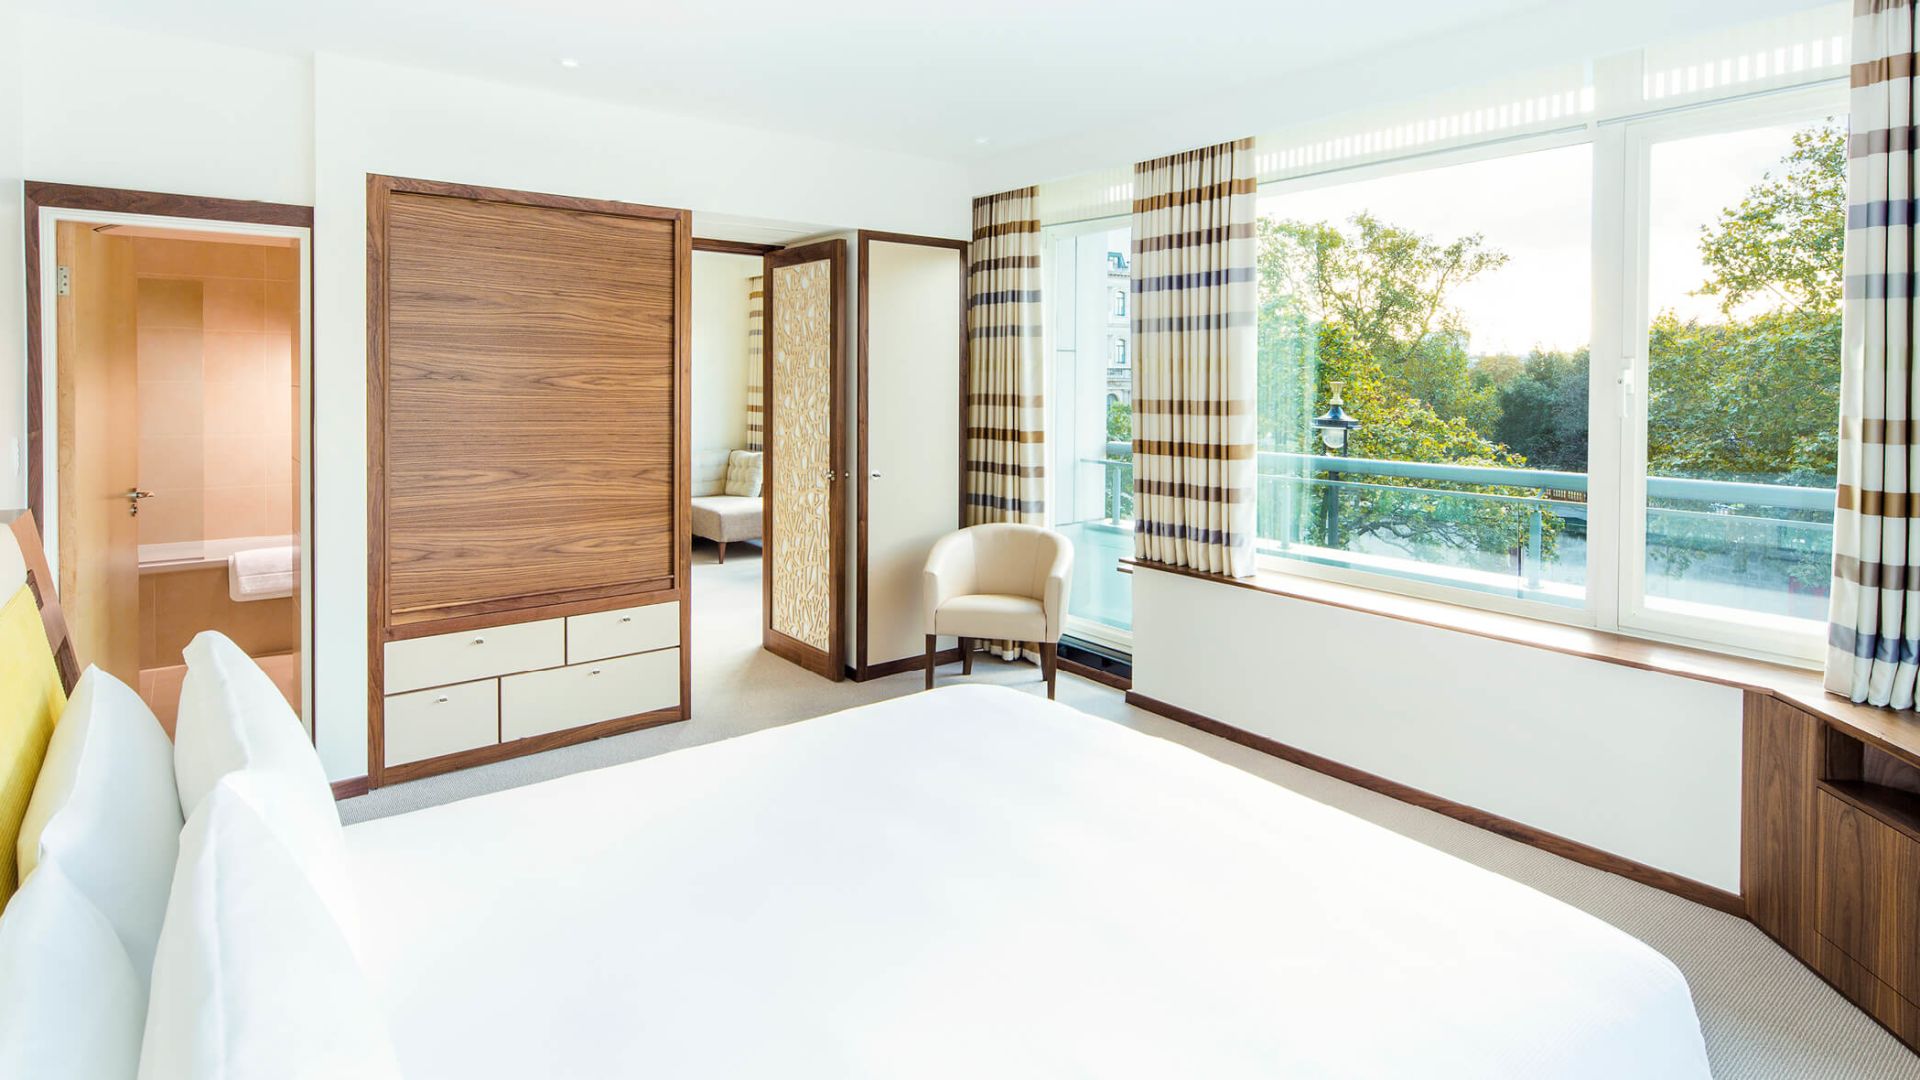 Park Suite Bedroom - Image